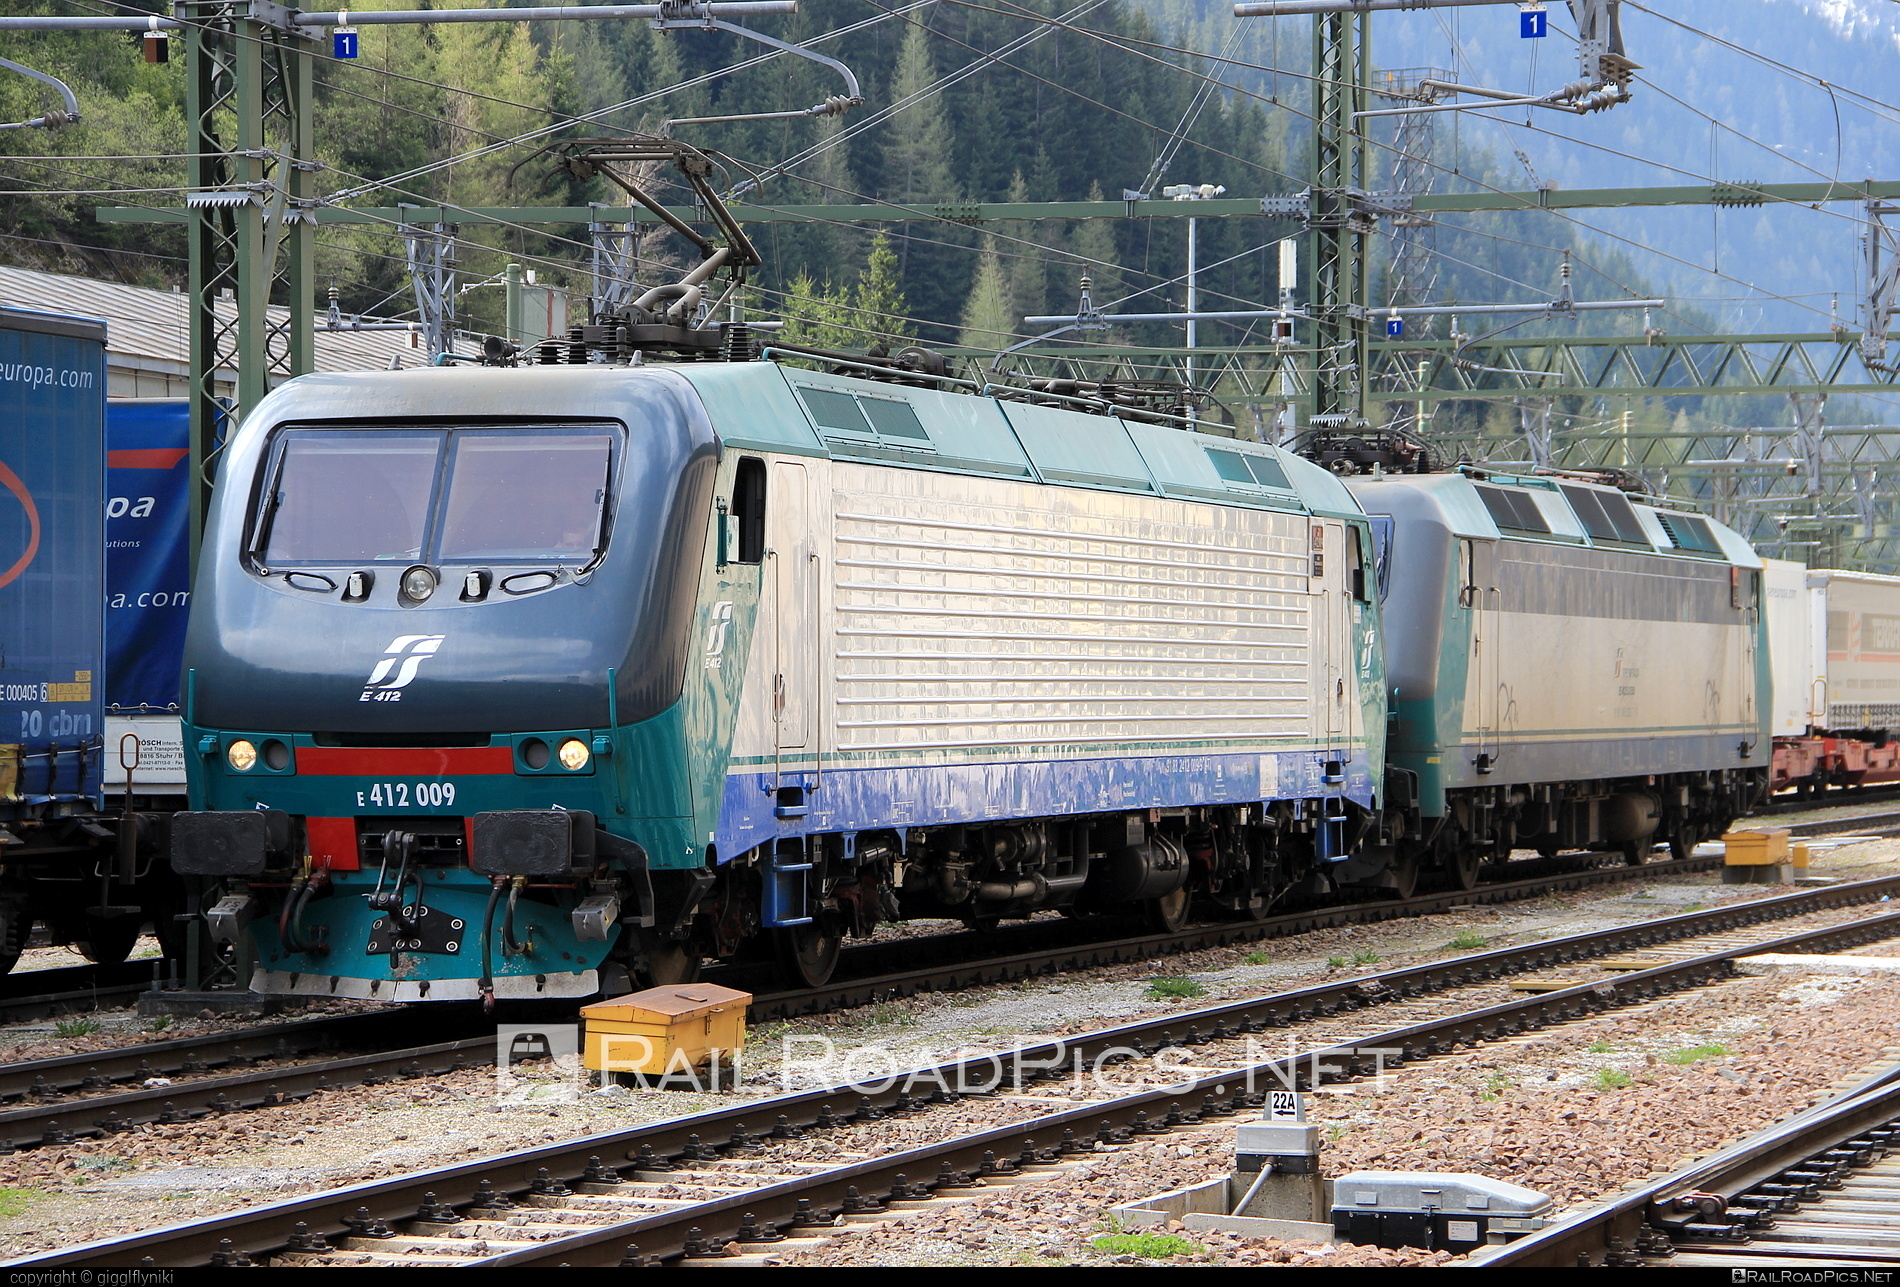 FS Class E.412 - E412 009 operated by Mercitalia Rail S.r.l. #e412 #ferroviedellostato #fs #fsClassE412 #fsitaliane #mercitalia